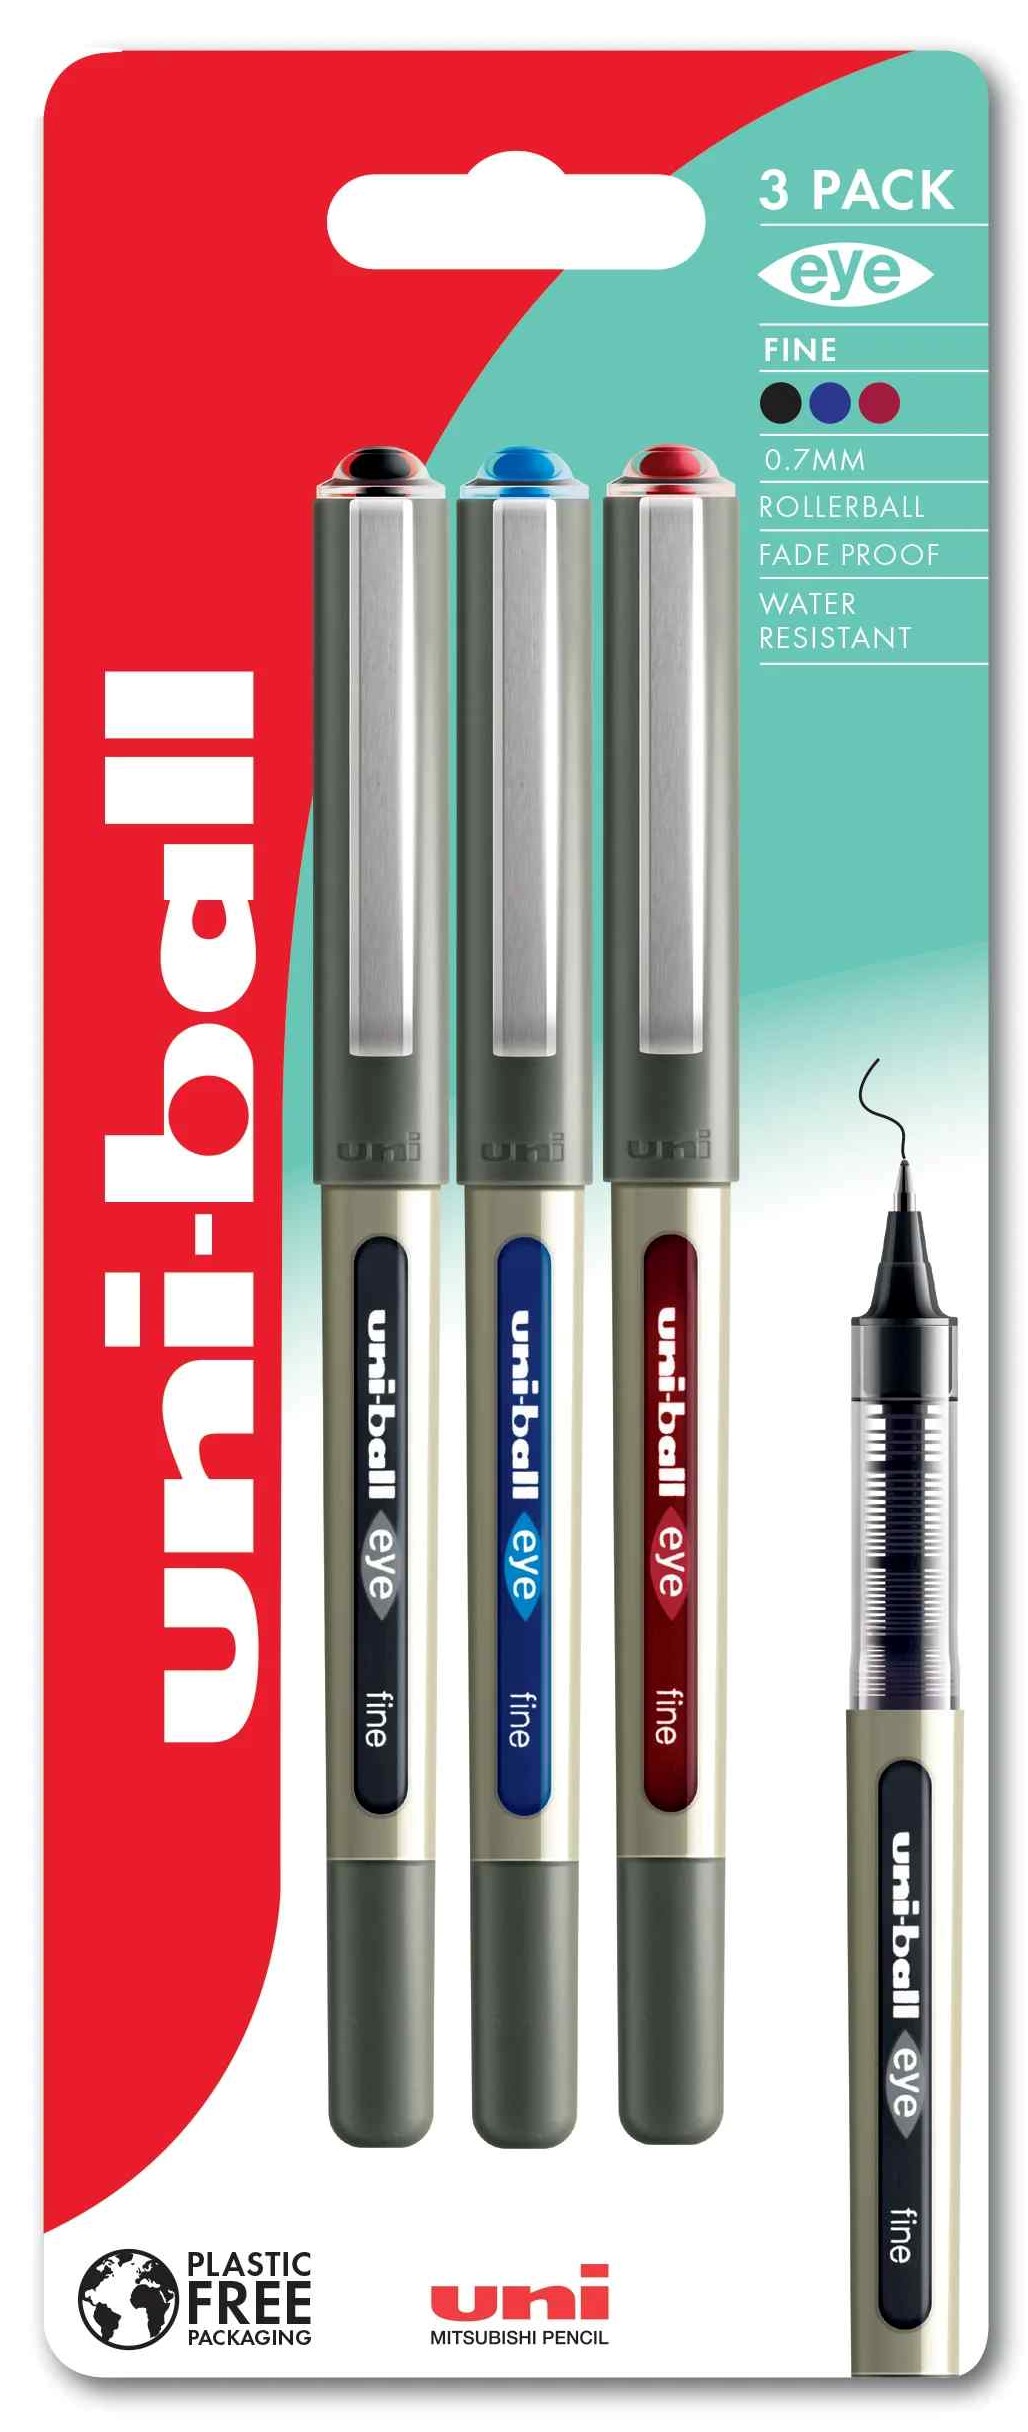 Uni-ball Pens UB157 Blister Pack Assorted Colours